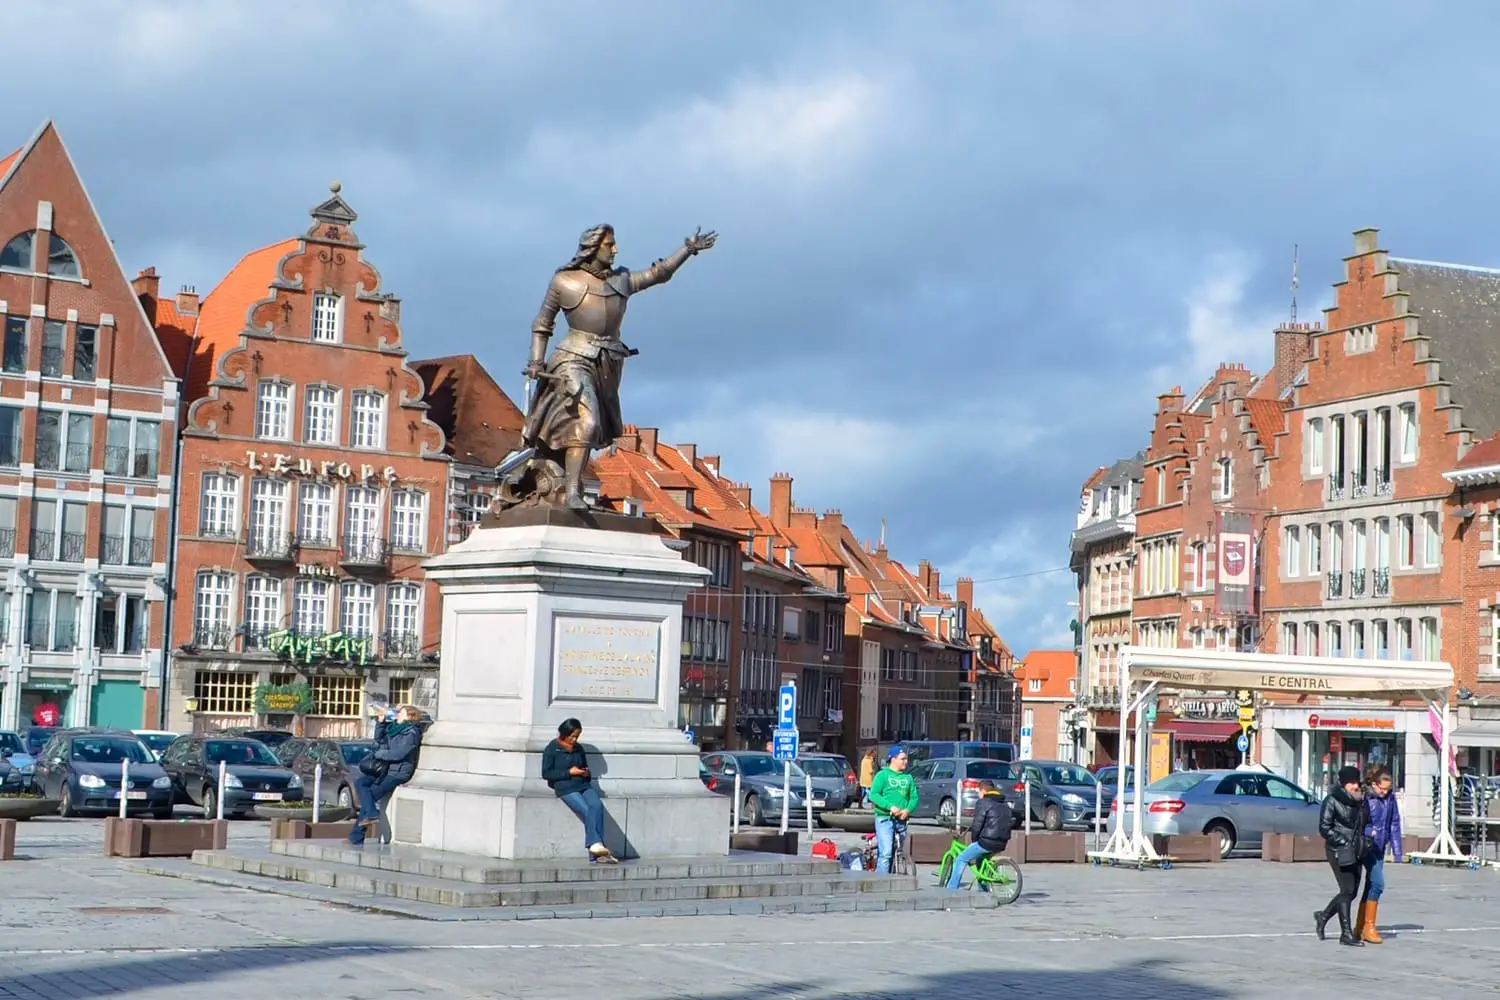 View of the people passing grote markt - main square in Tournai/Doornik, Belgium